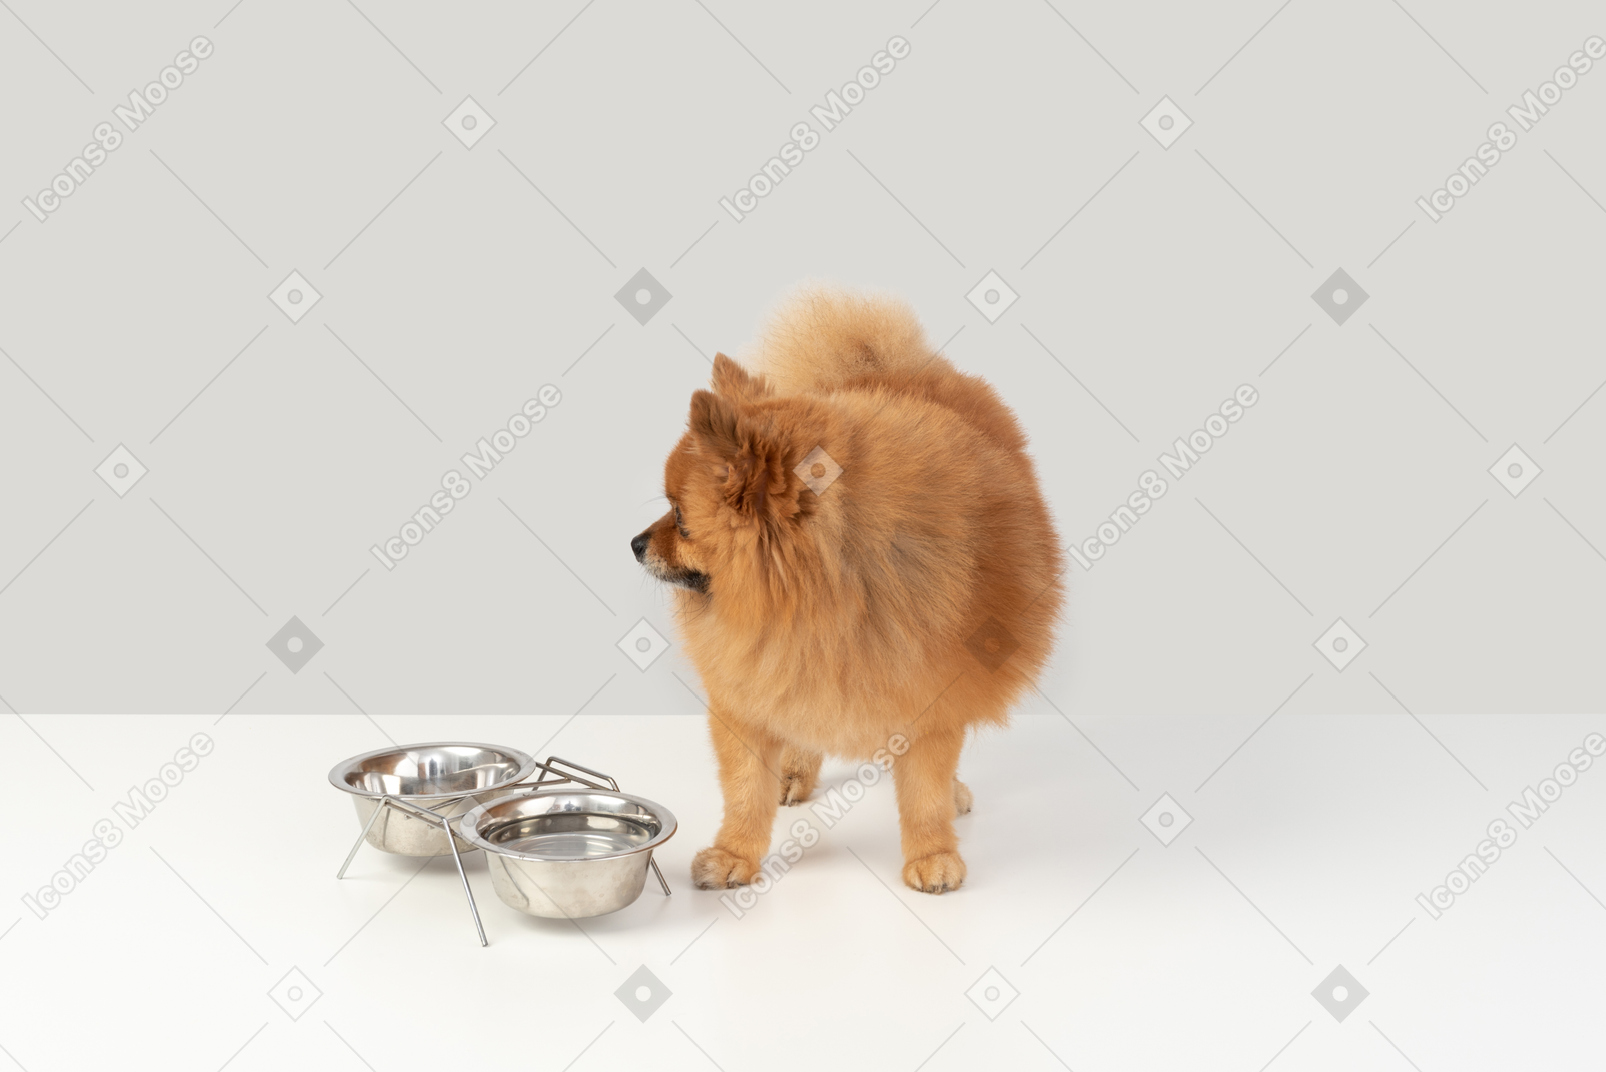 Cute spitz dog wanna drink some water